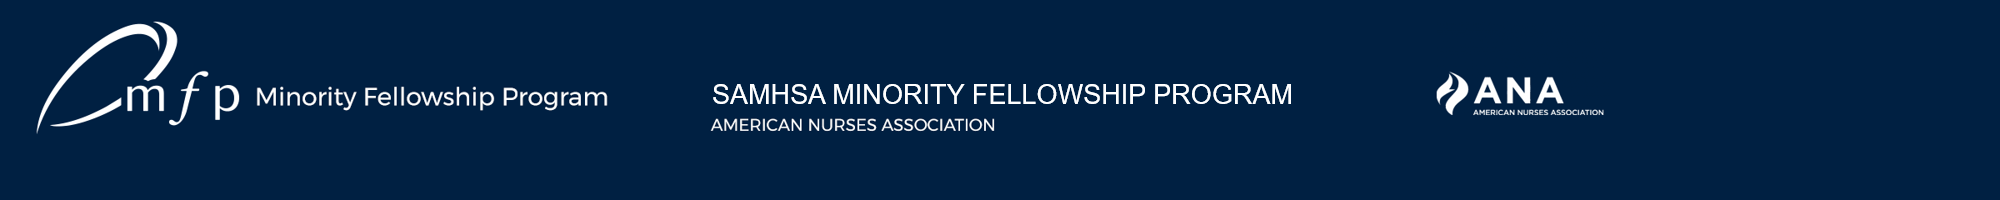 SAMHSA Minority Fellowship Program logo